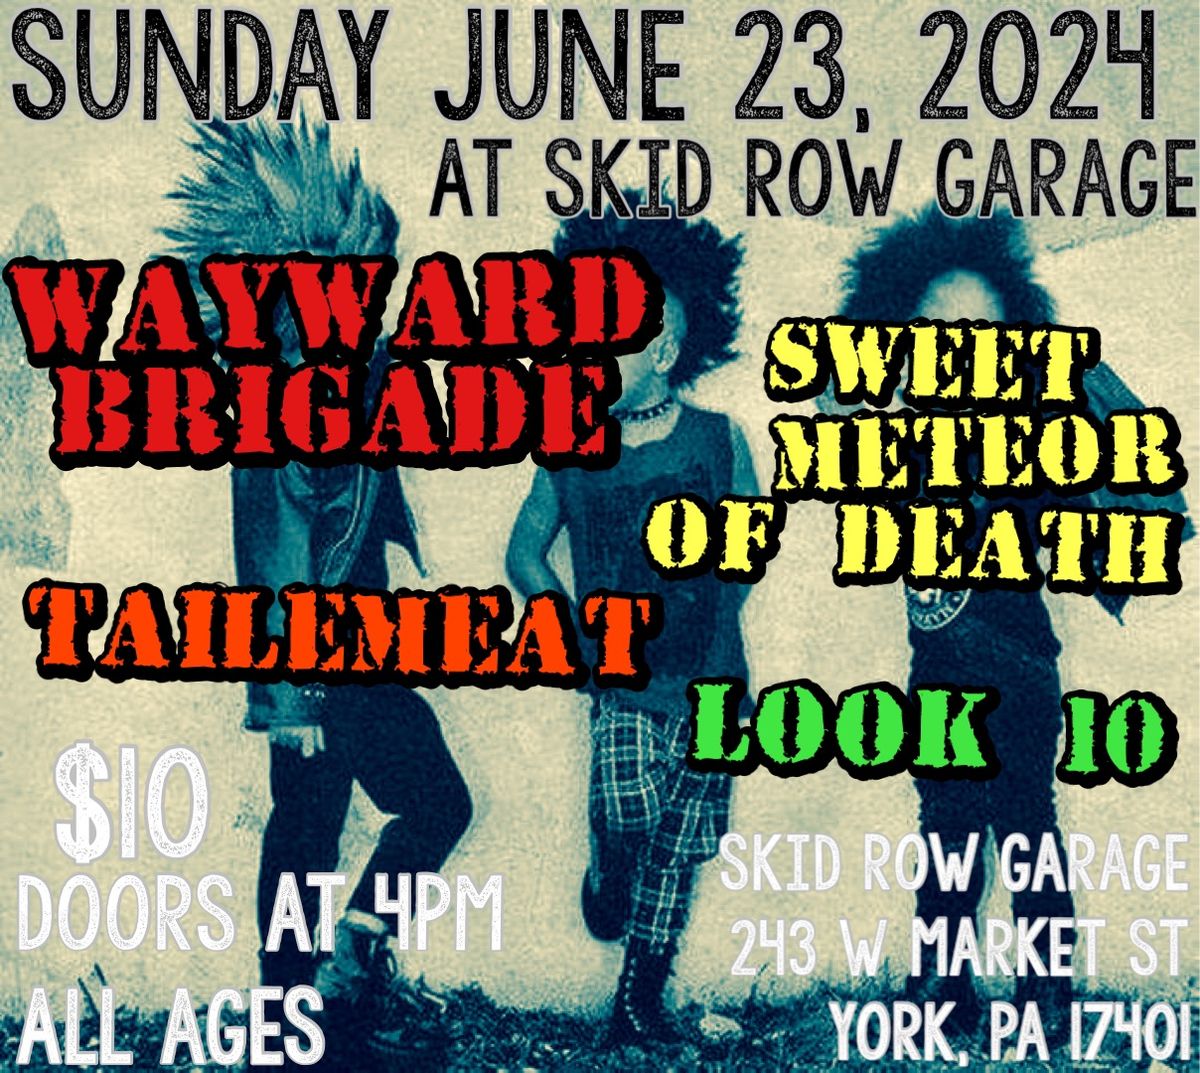 Wayward Brigade, Sweet Meteor of Death, Tailmeat, and Look 10 at Skid Row Garage